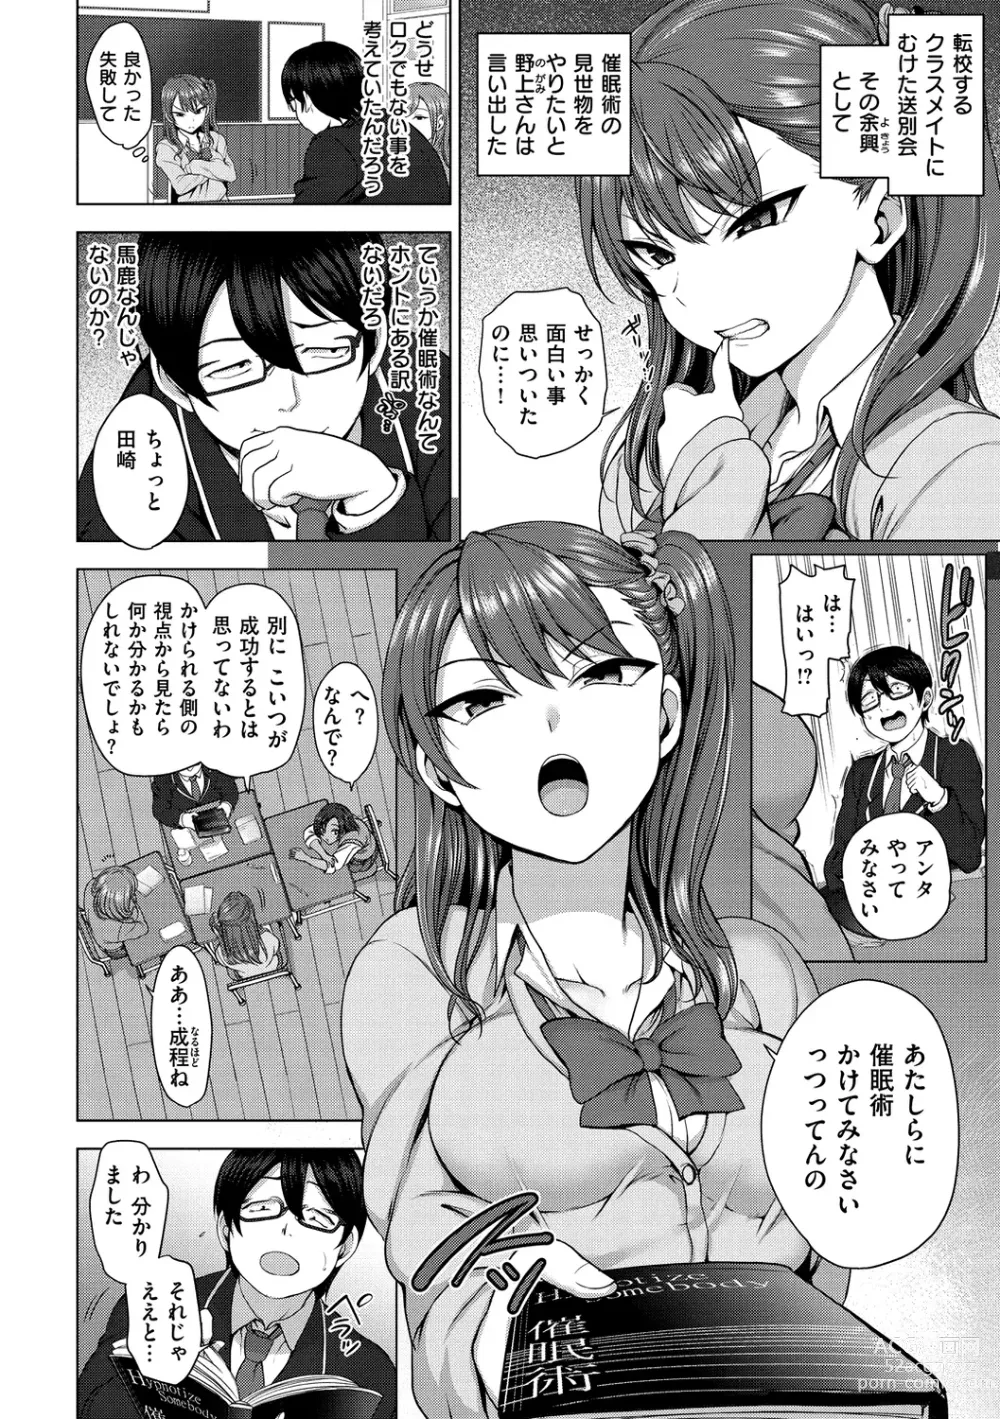 Page 12 of manga Ijirare